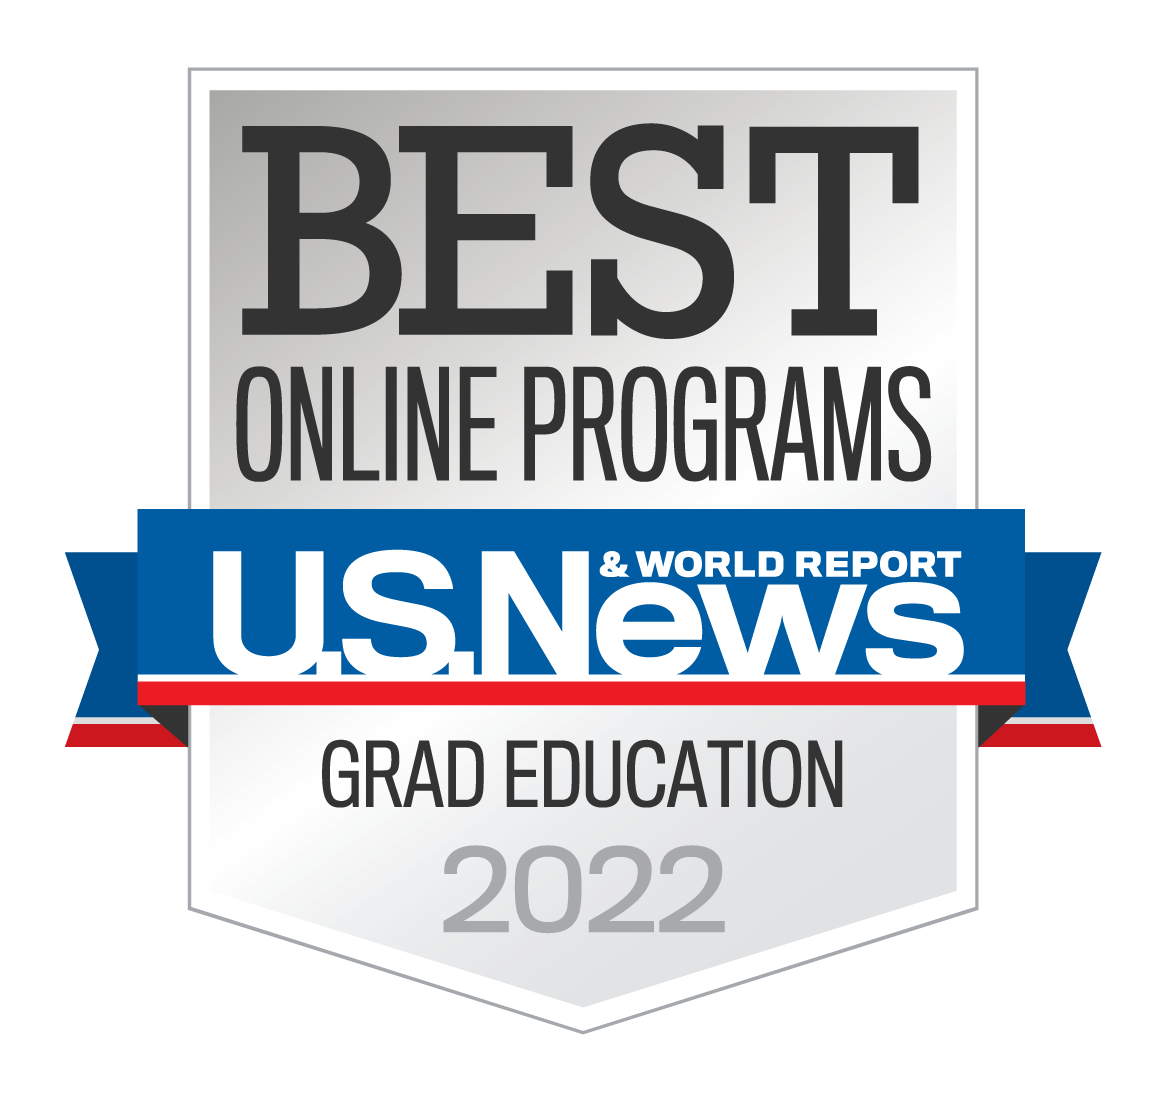 Best Online Programs Grad Education 2022